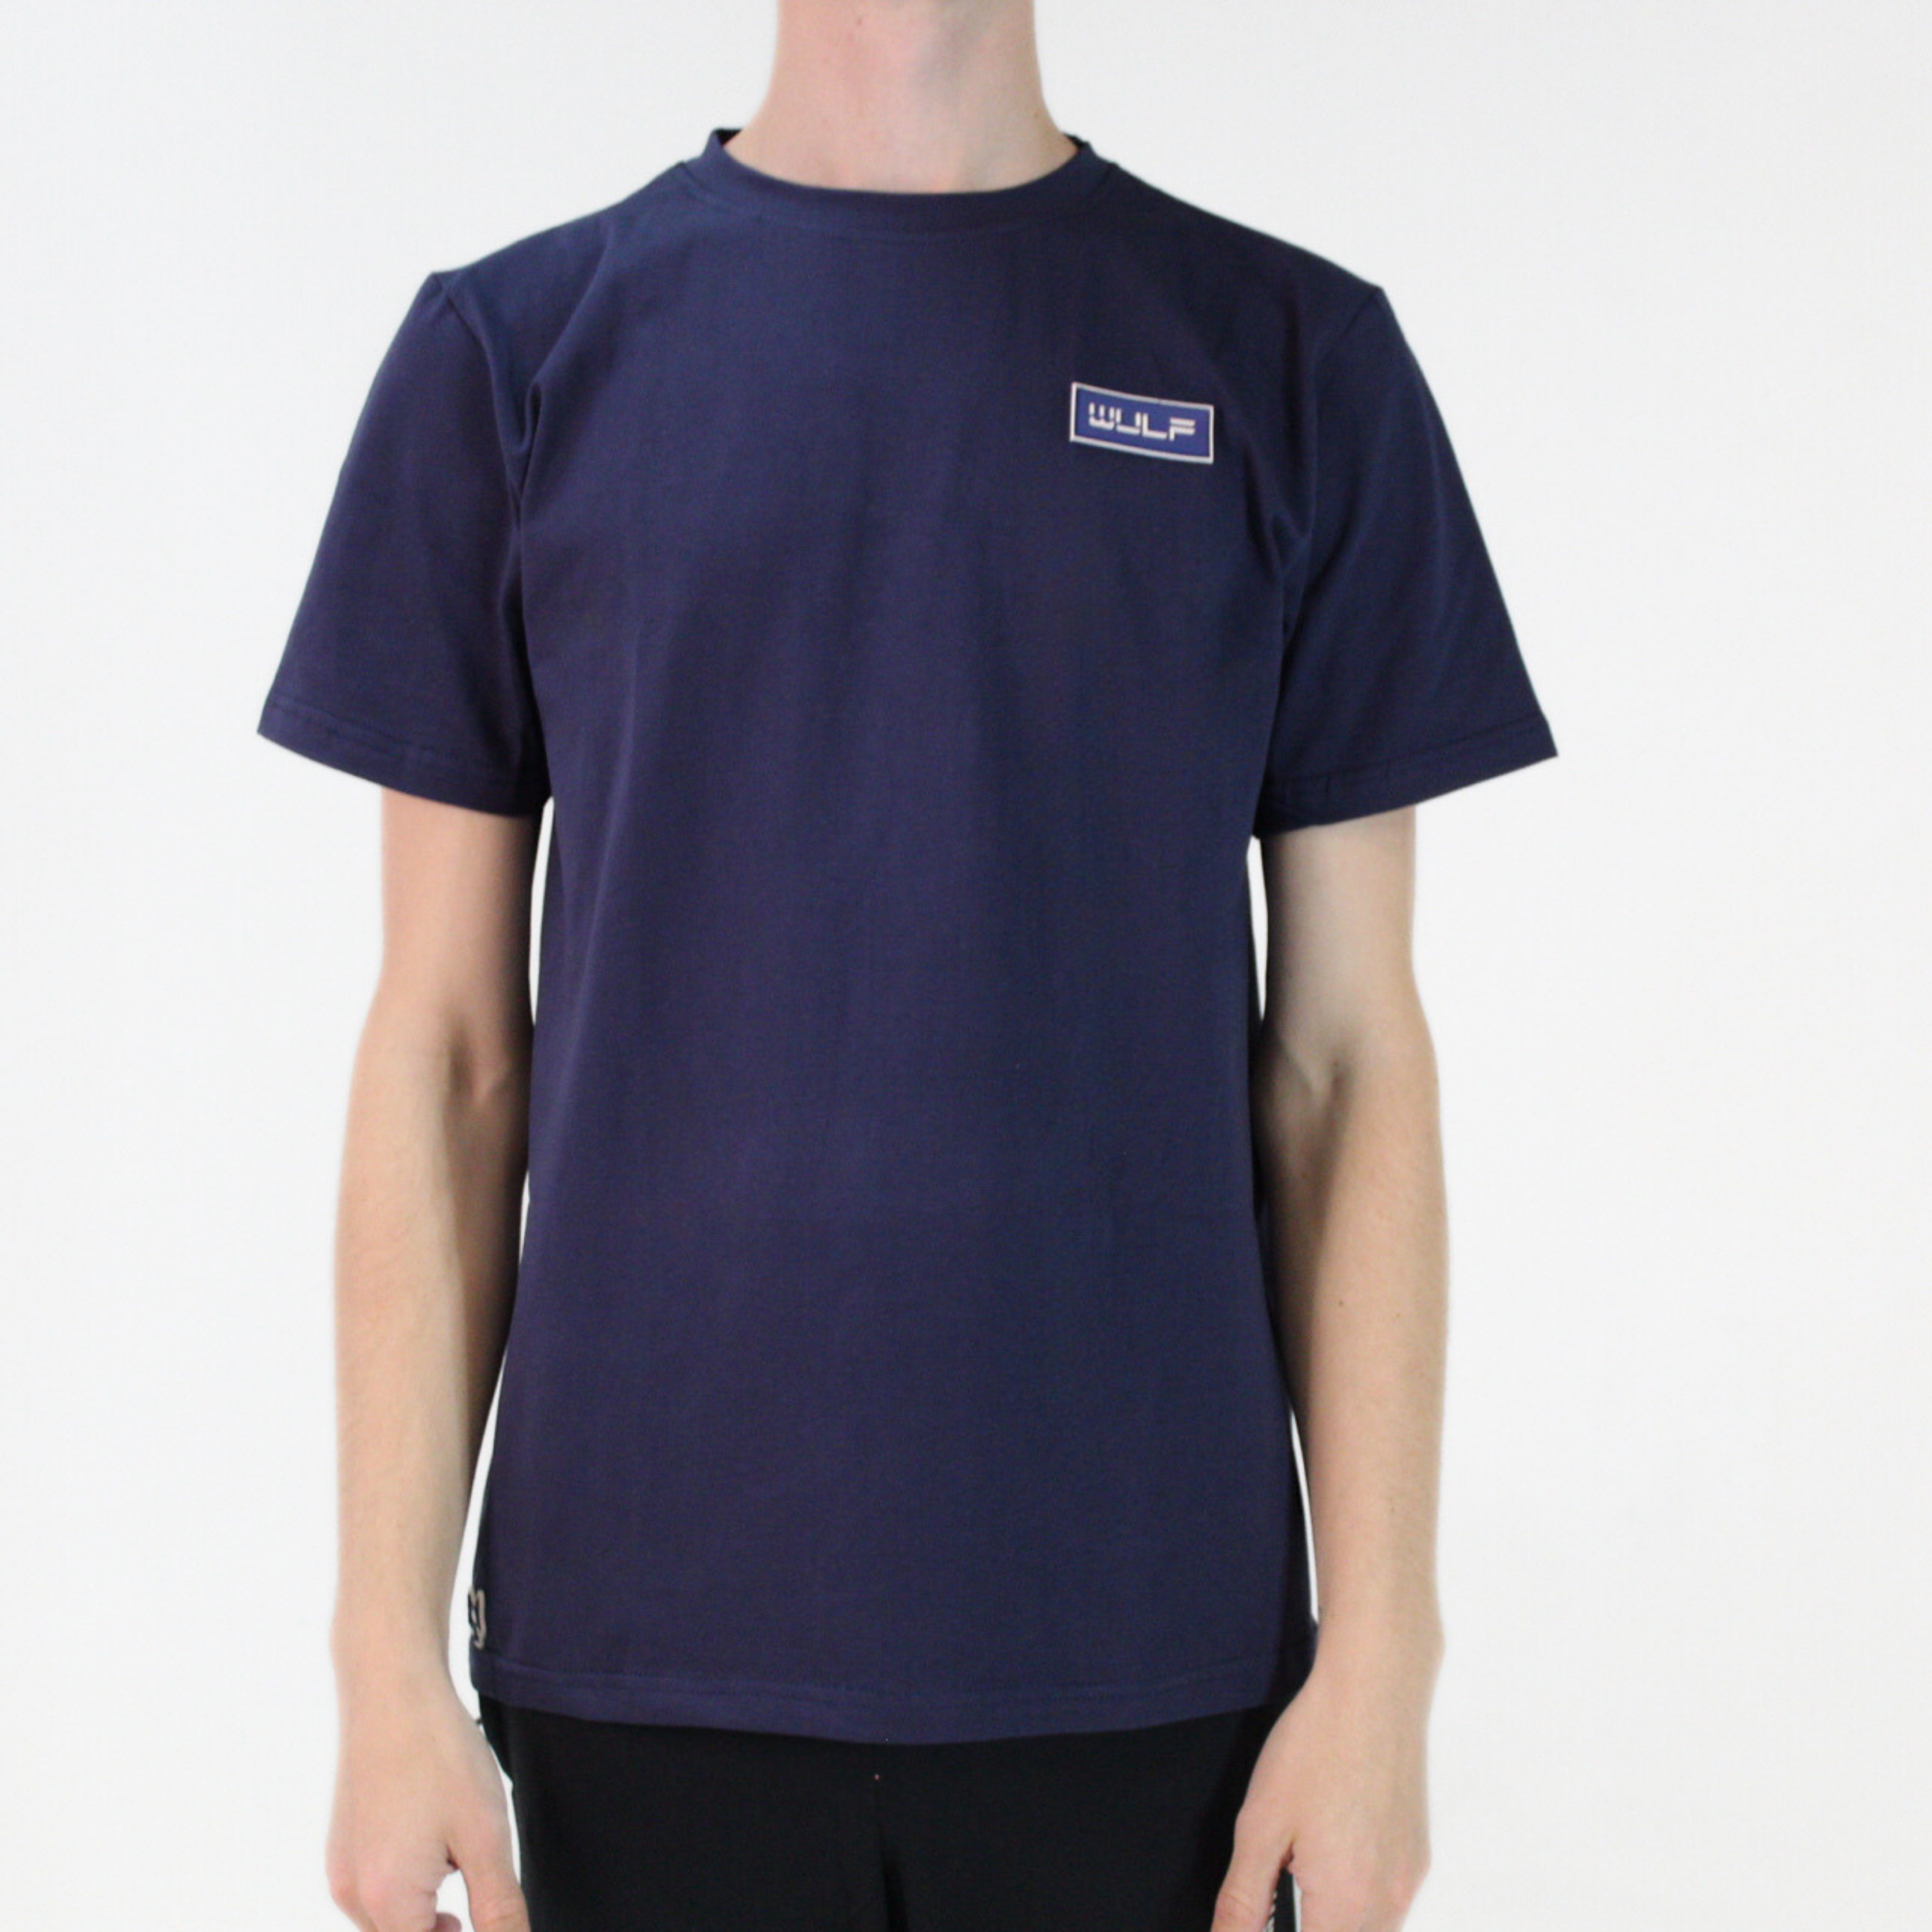 Men’s T-Shirt Navy Blue with White Logo